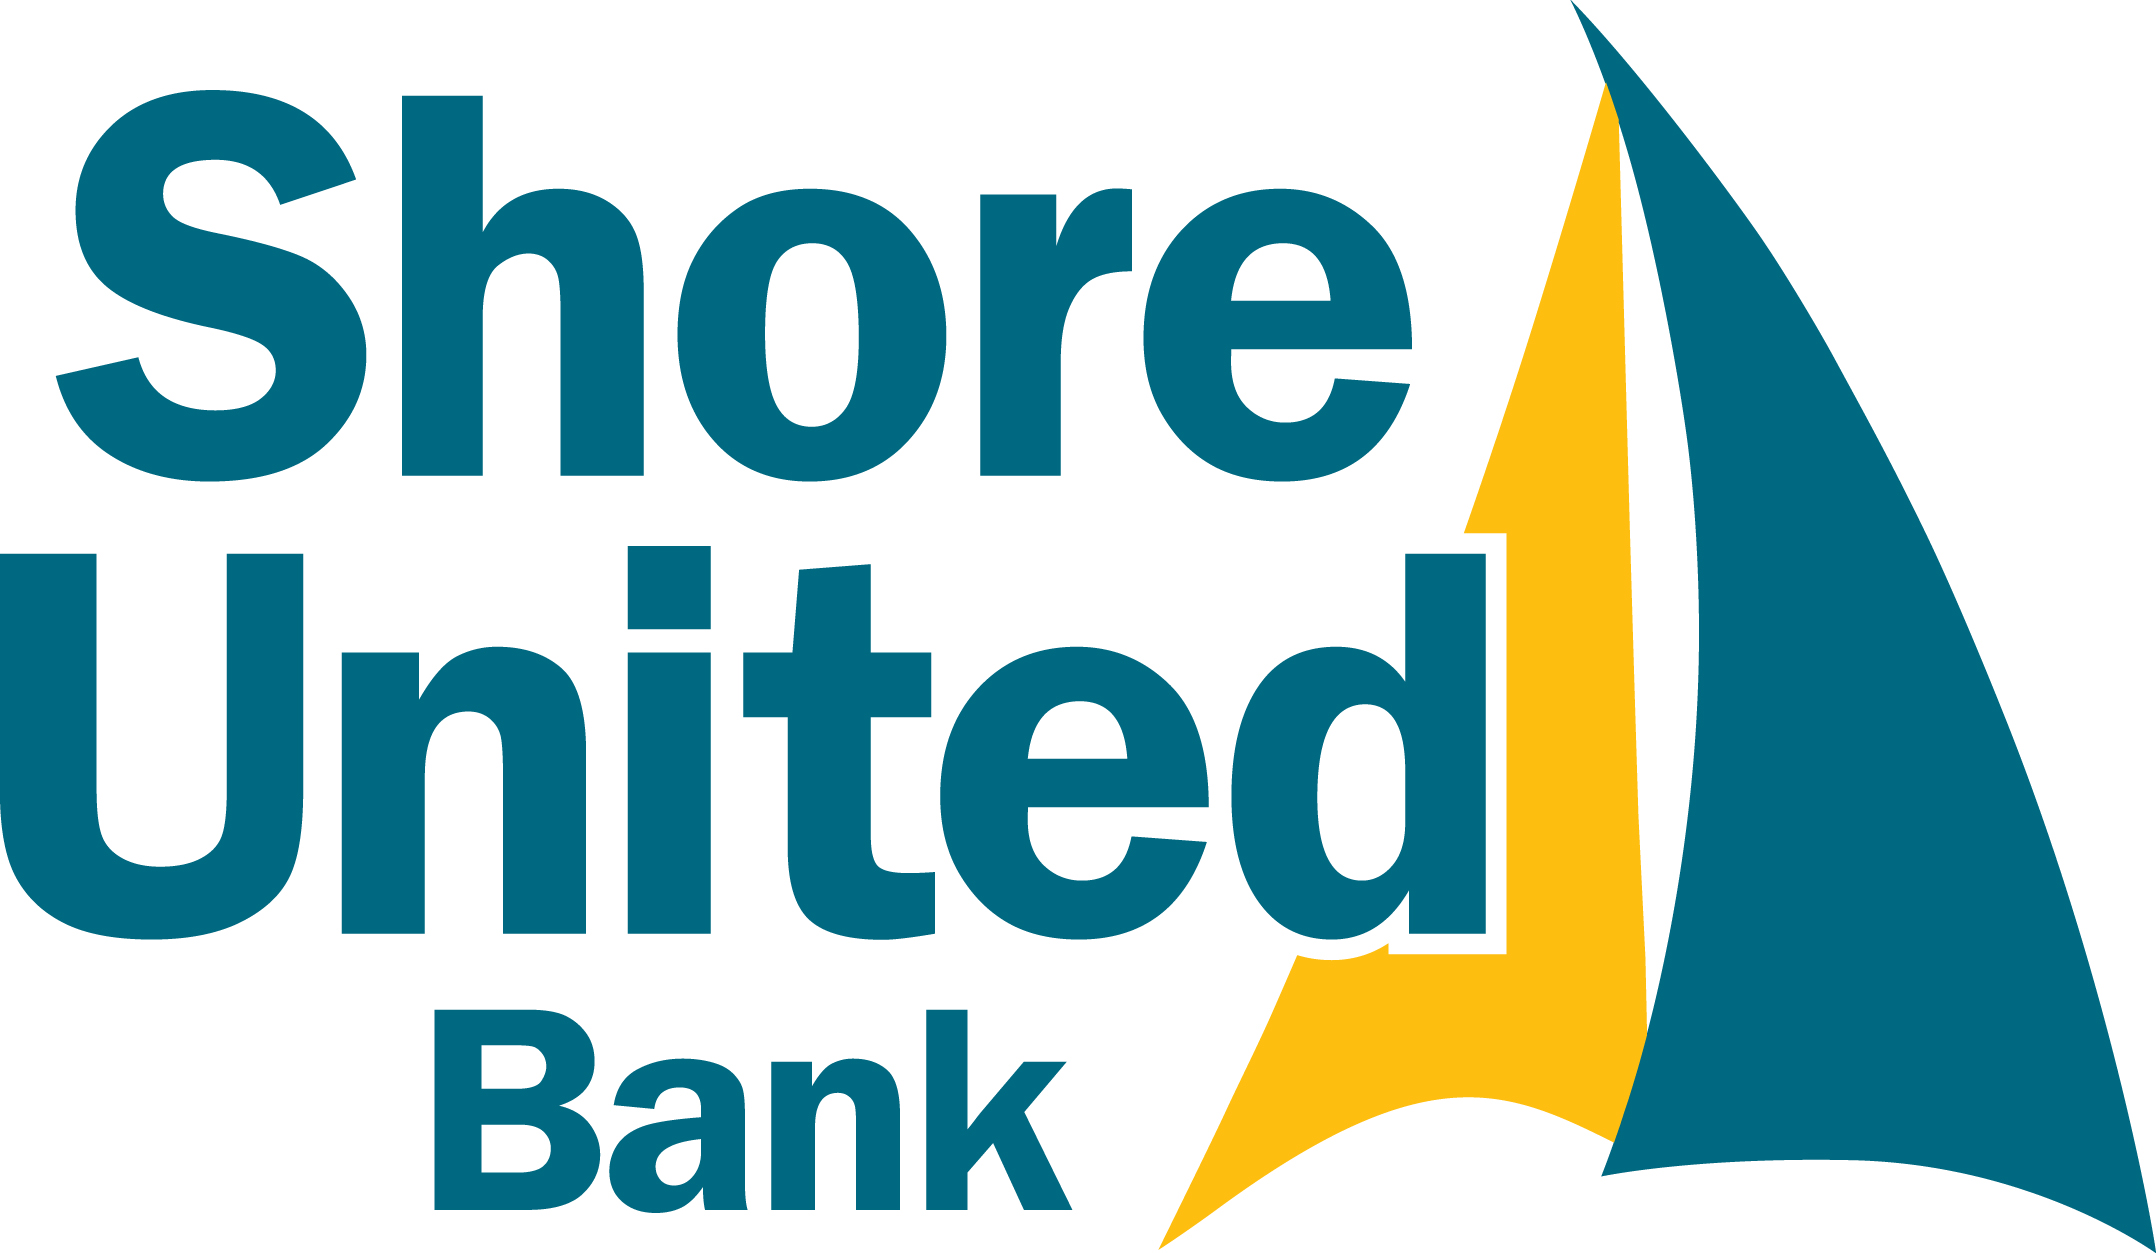 Shore United Bank Logo